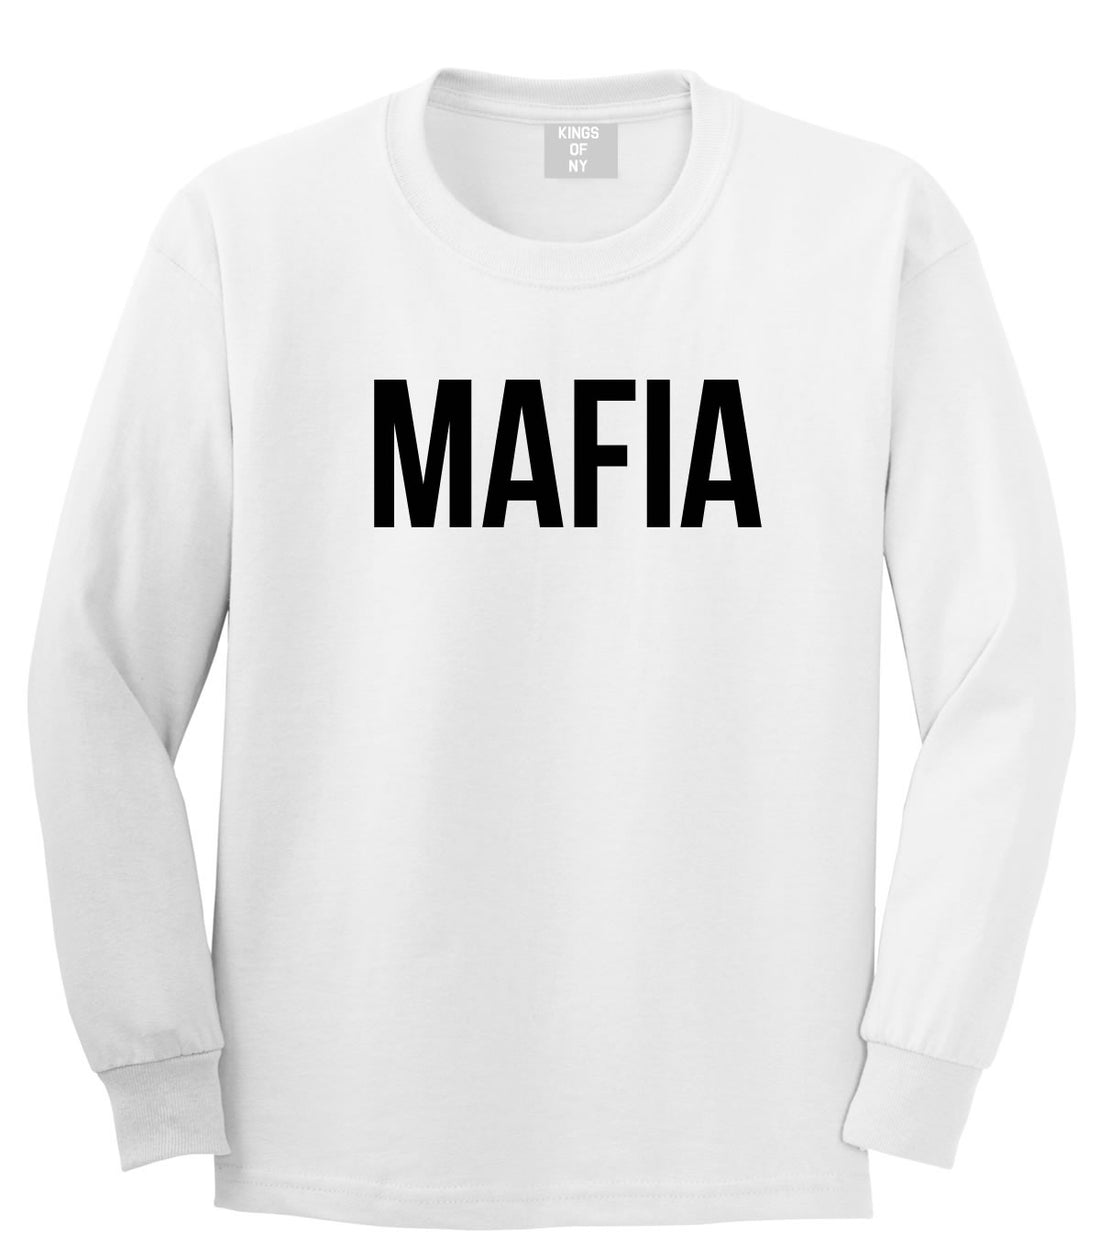 Mafia Junior Italian Mob  Long Sleeve T-Shirt in White By Kings Of NY